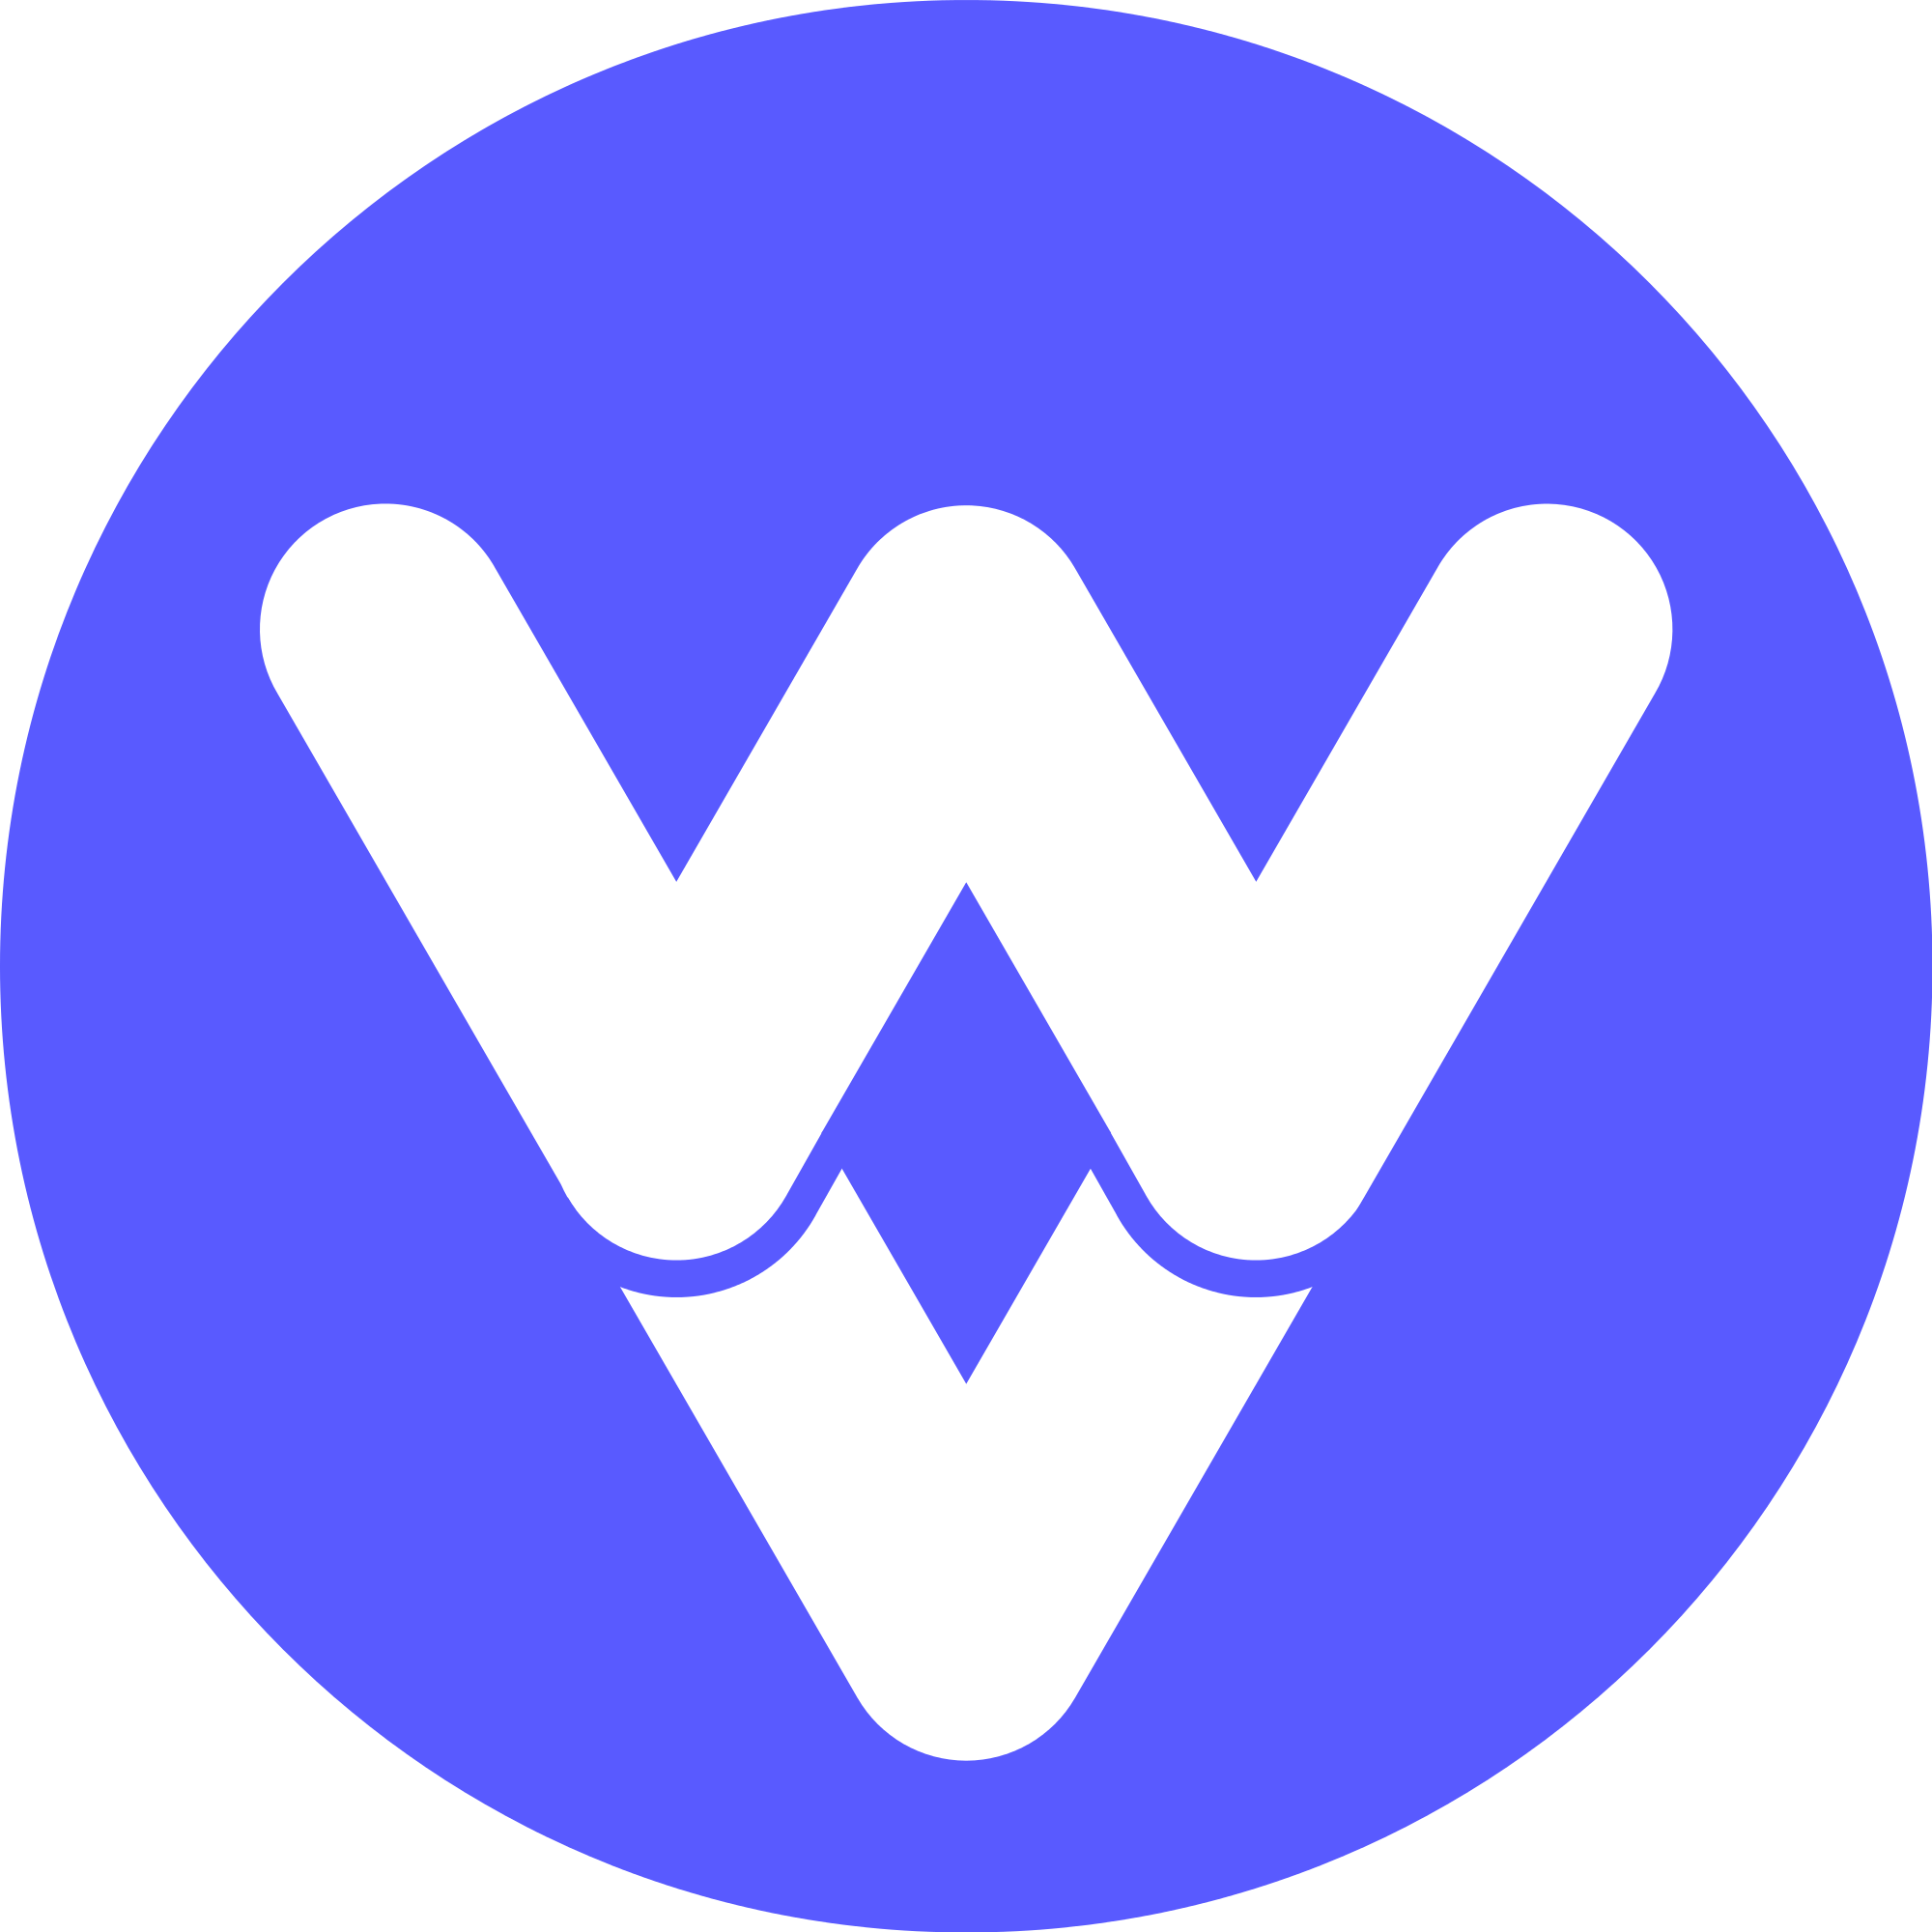 WV Logo - File:WV logo 2.svg - Wikimedia Commons